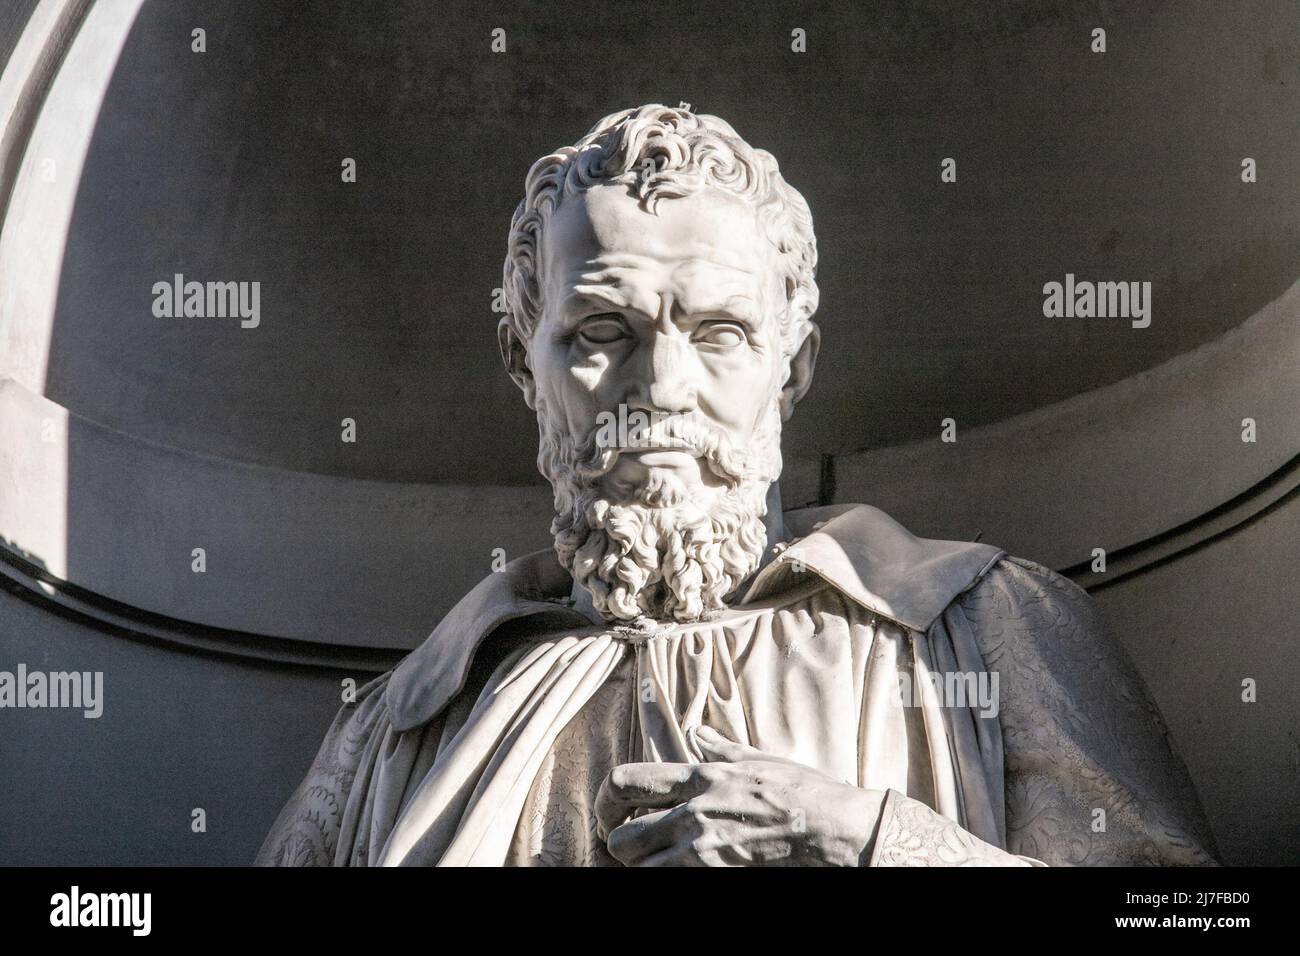 Statue von Michelangelo Buonarroti, Piazzale degli Uffizi, Florenz, Italien Stockfoto